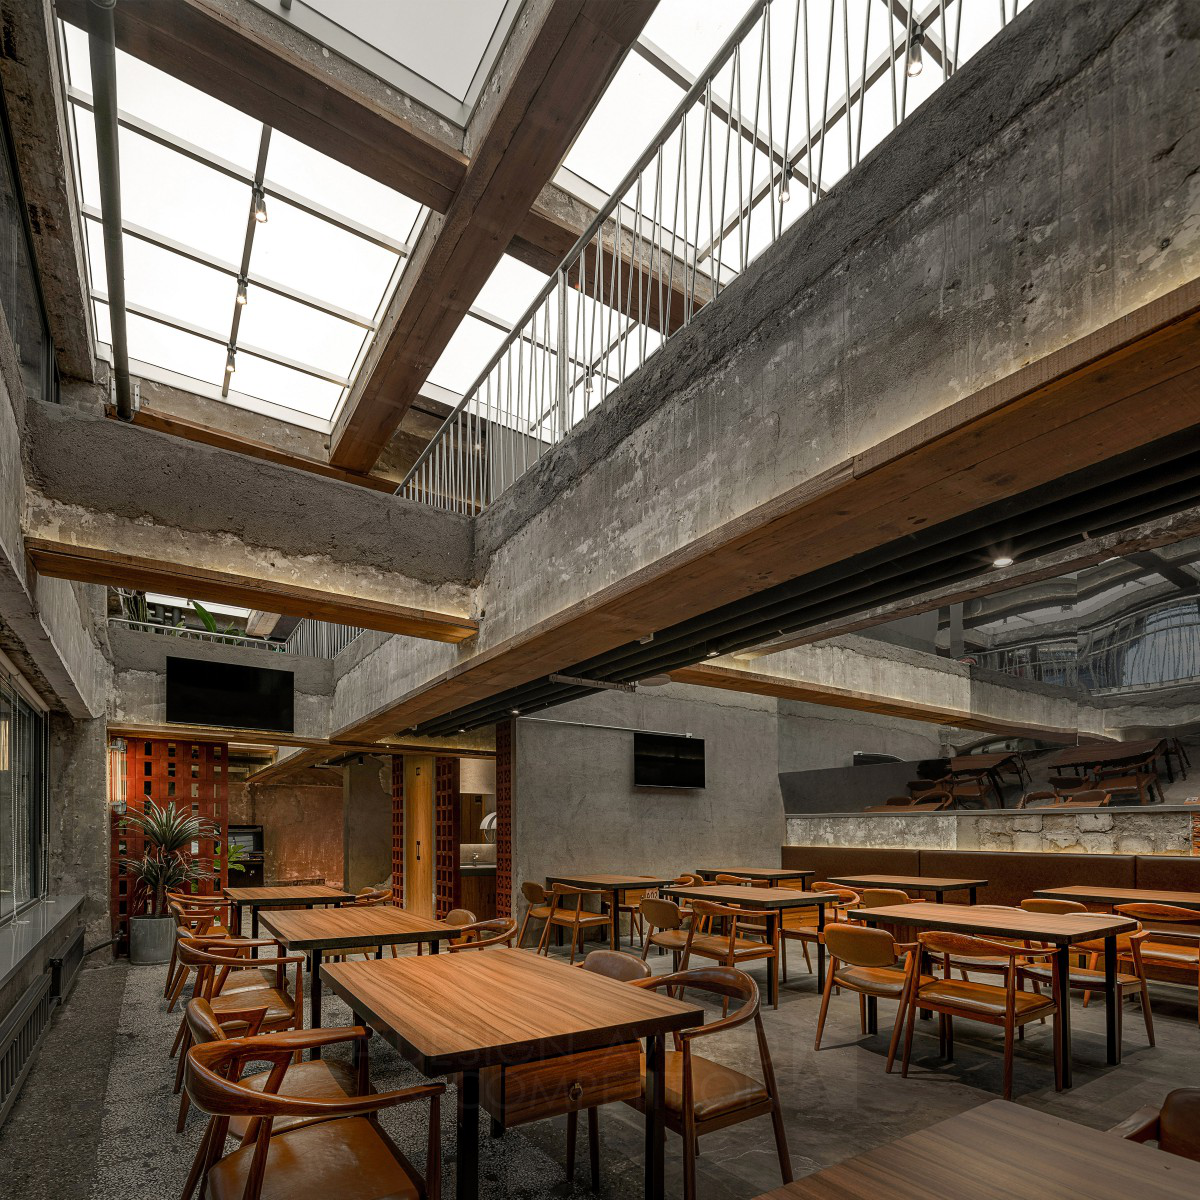 Bojun Liu wins Silver at the prestigious A' Interior Space, Retail and Exhibition Design Award with One Barbecue Restaurant.